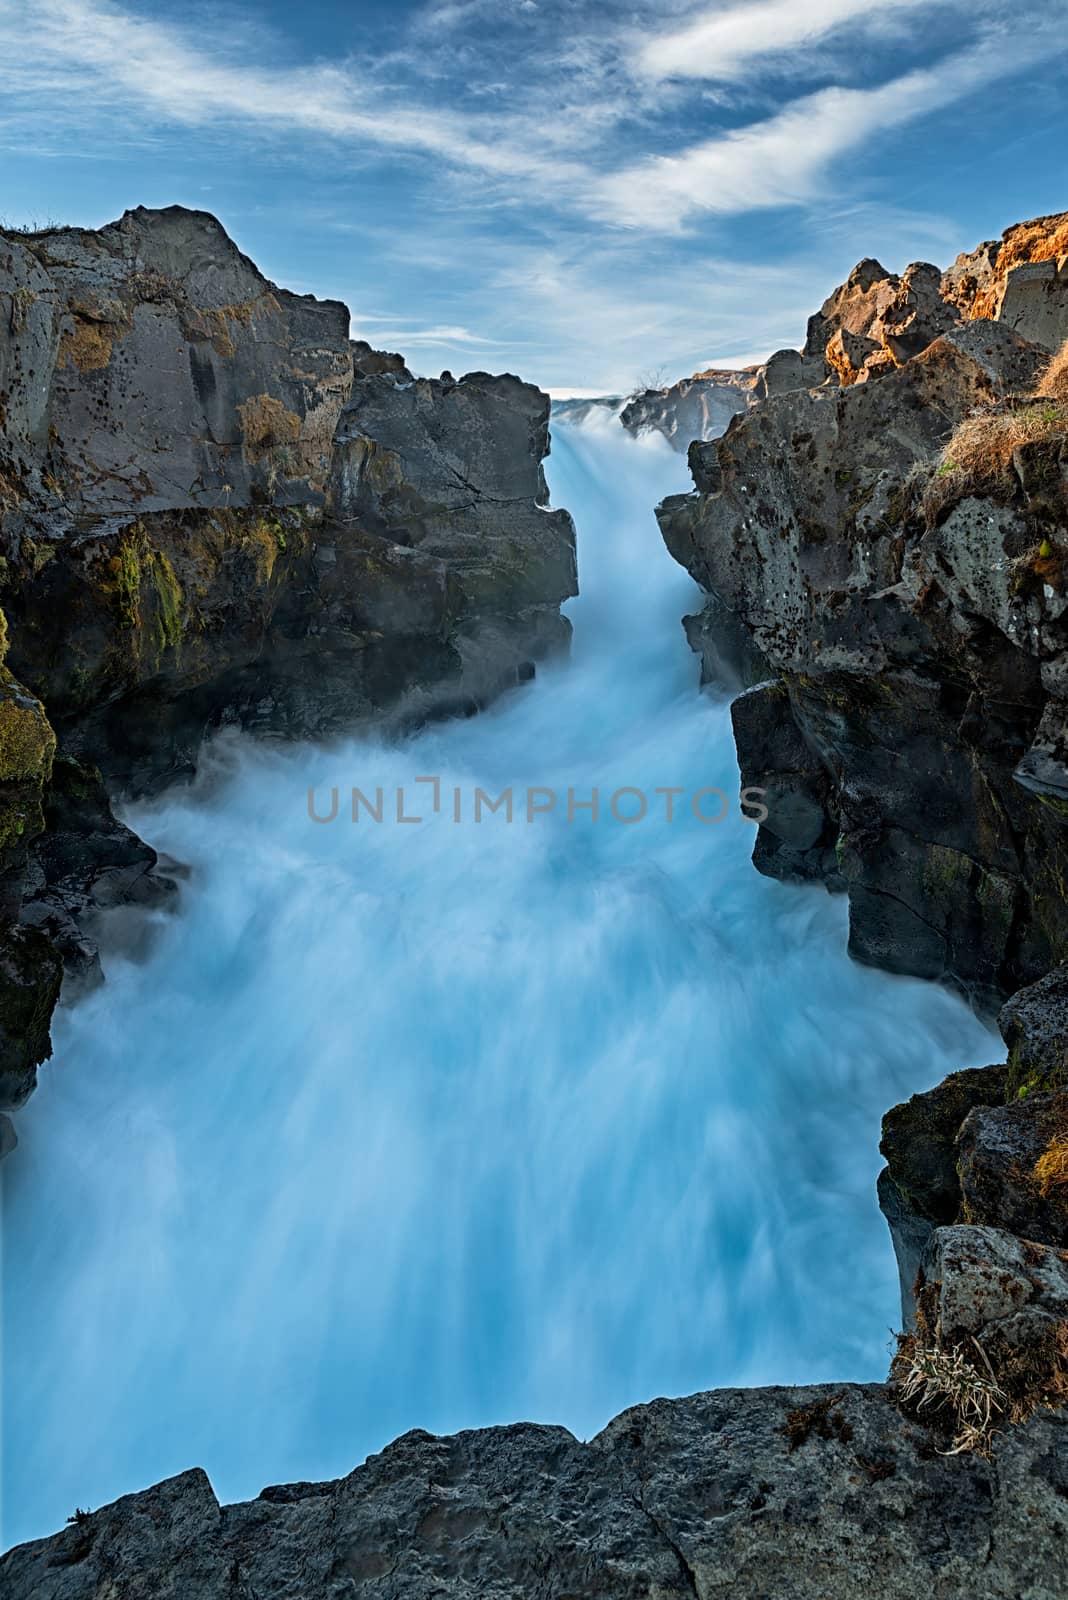 Hlauptungufoss waterfall in Iceland by LuigiMorbidelli